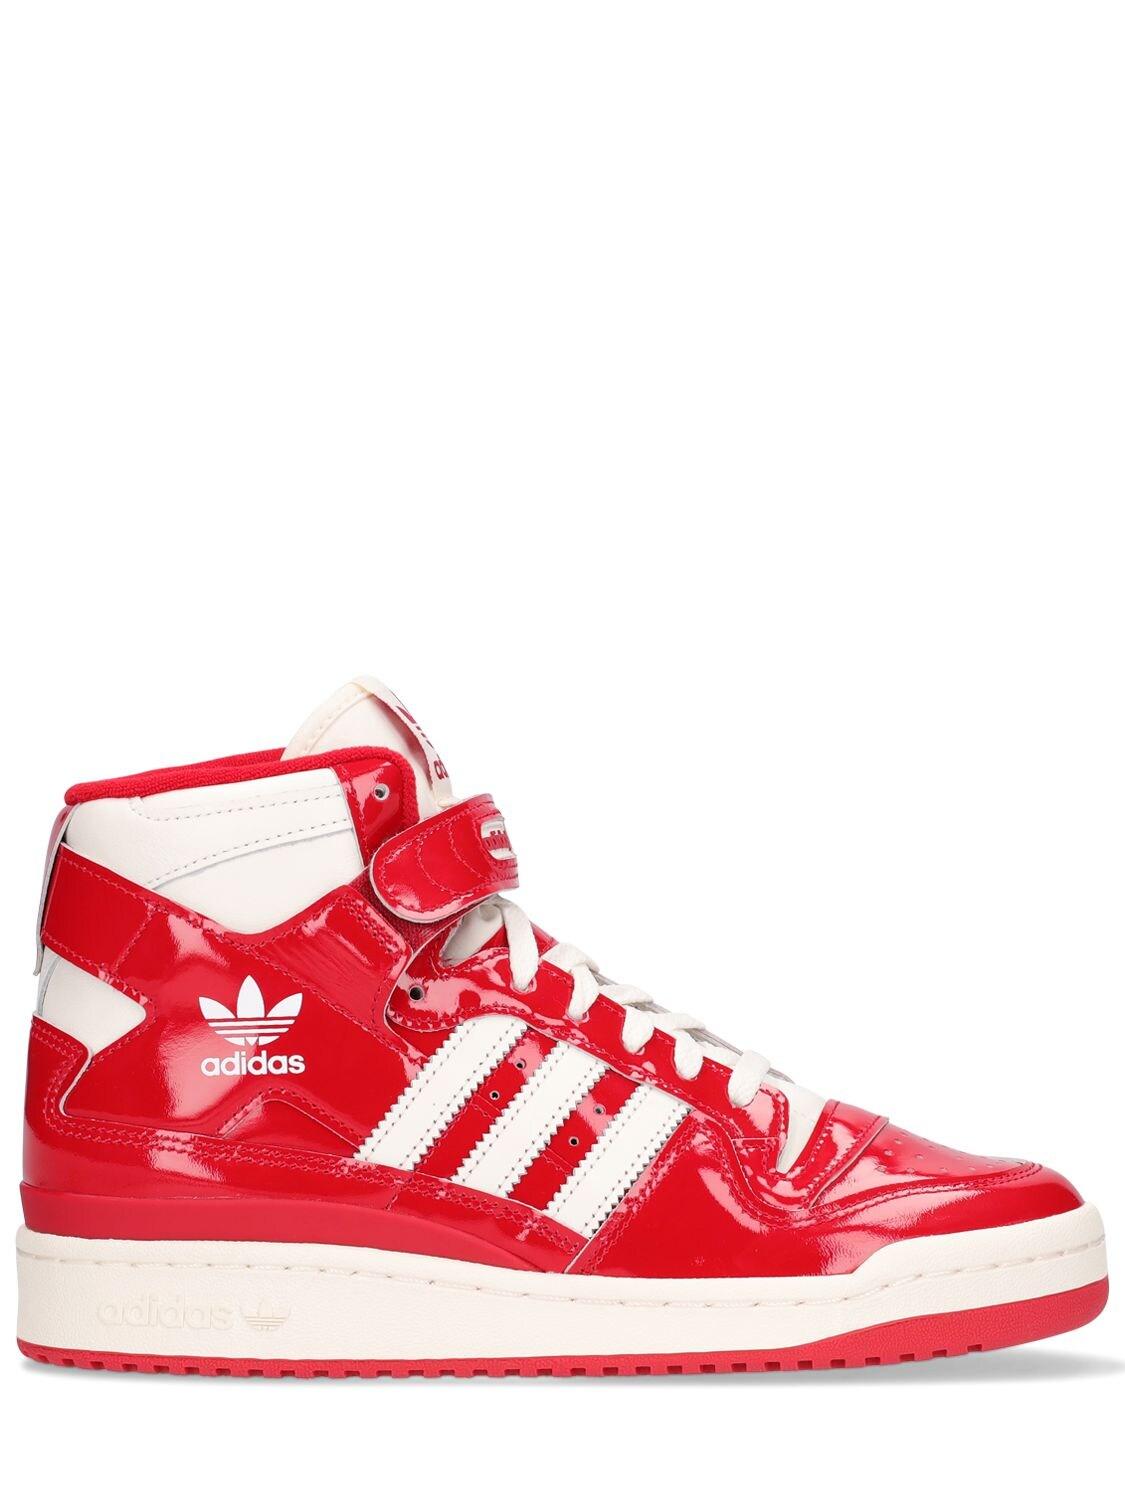 adidas Originals Forum 84 Hi Sneakers in Red | Lyst